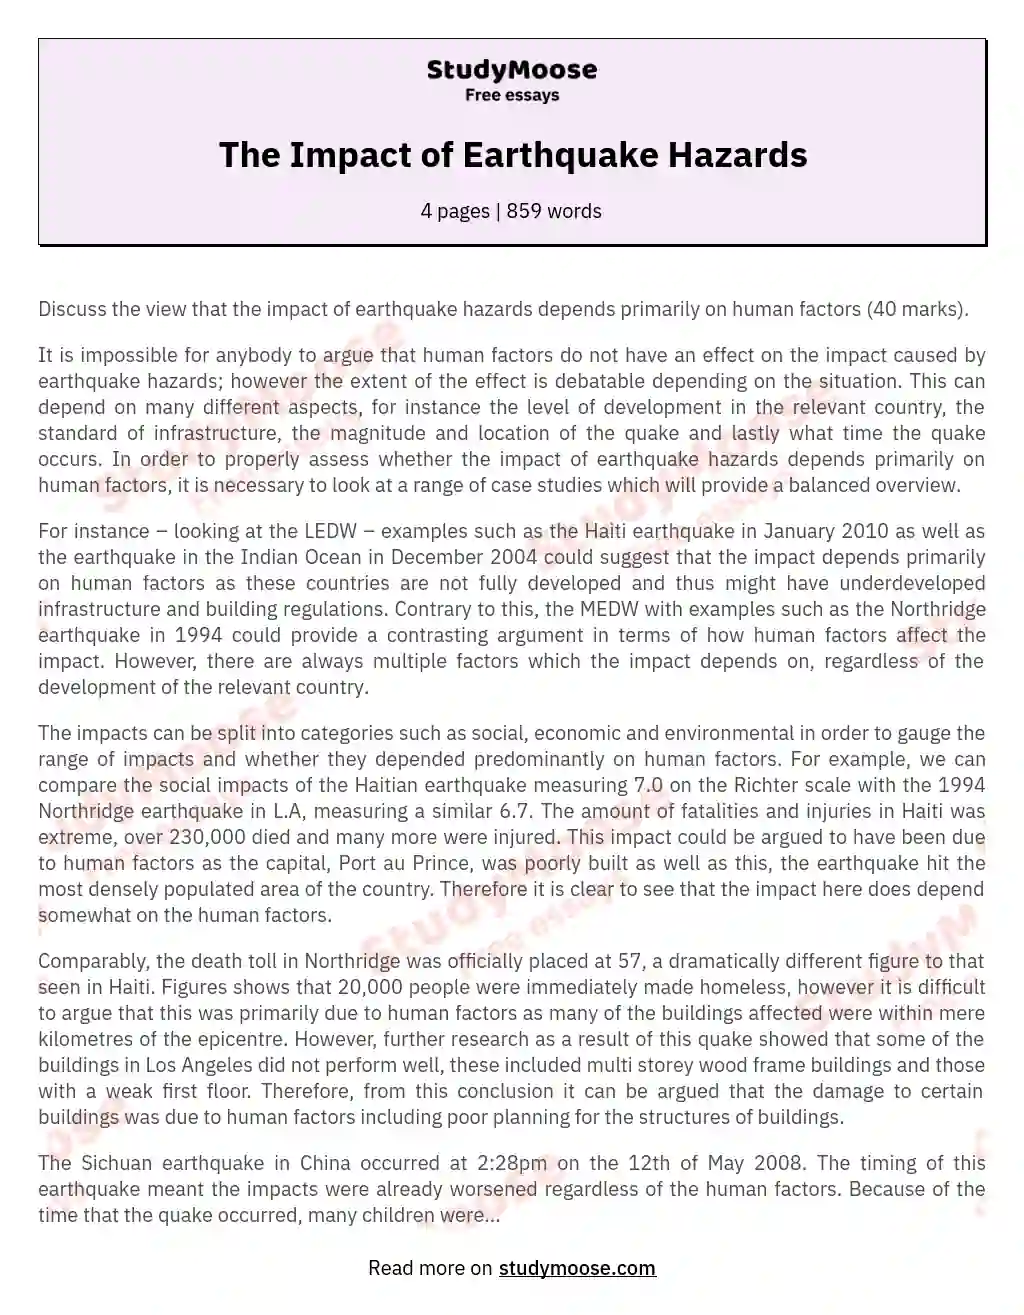 The Impact of Earthquake Hazards essay